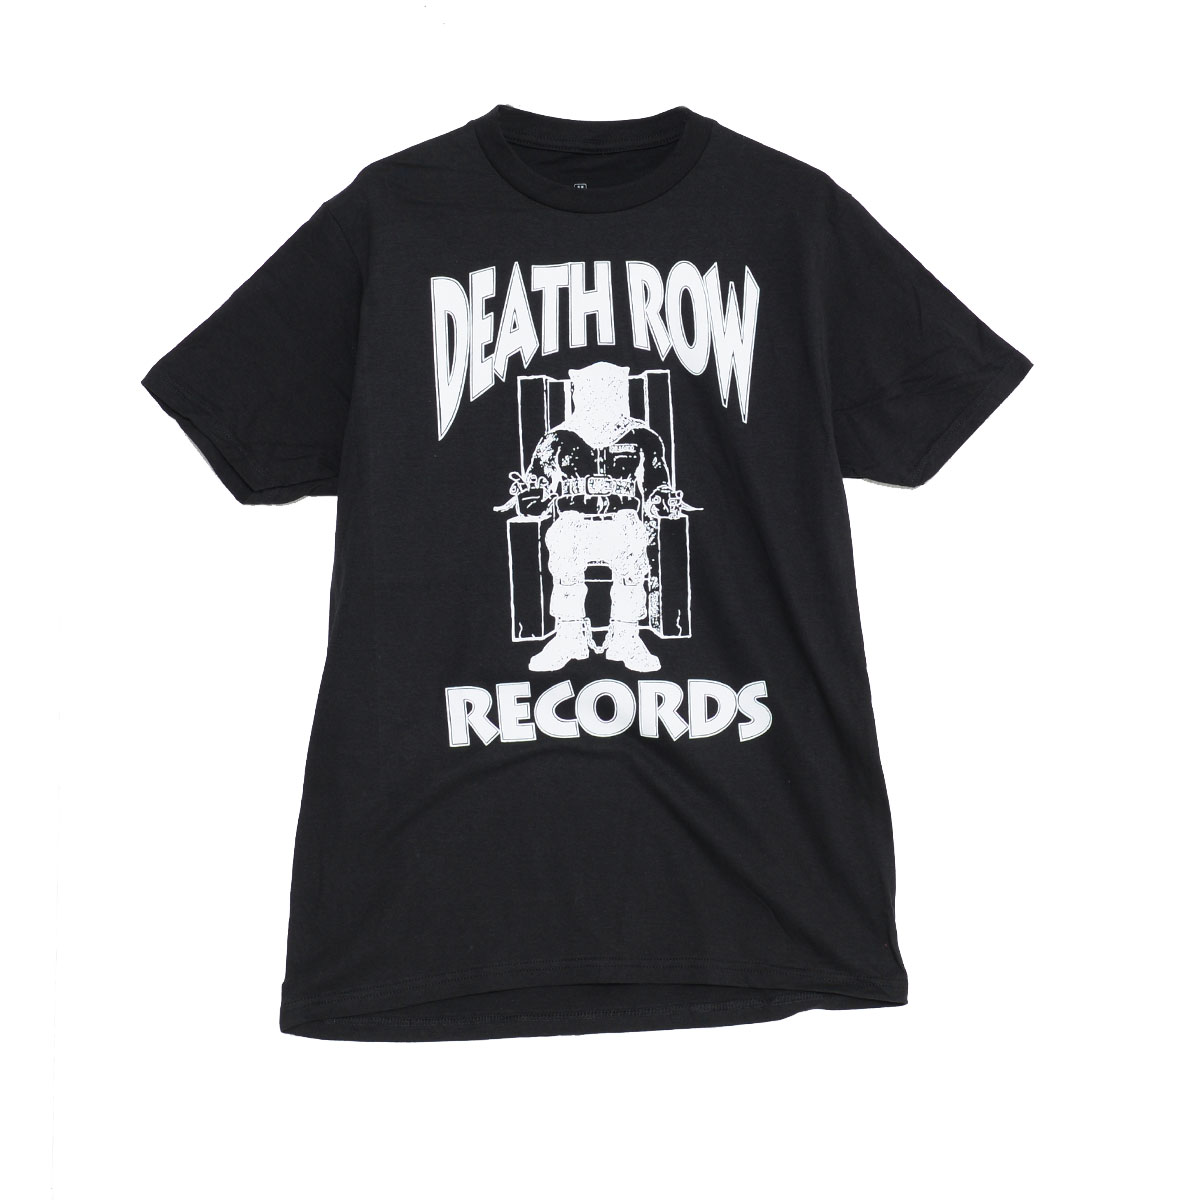 DEATH ROW RECORDS(デスロウレコード)WHITE LOGO MENS LIGHTWEIGHT T-SHIRT/全1色